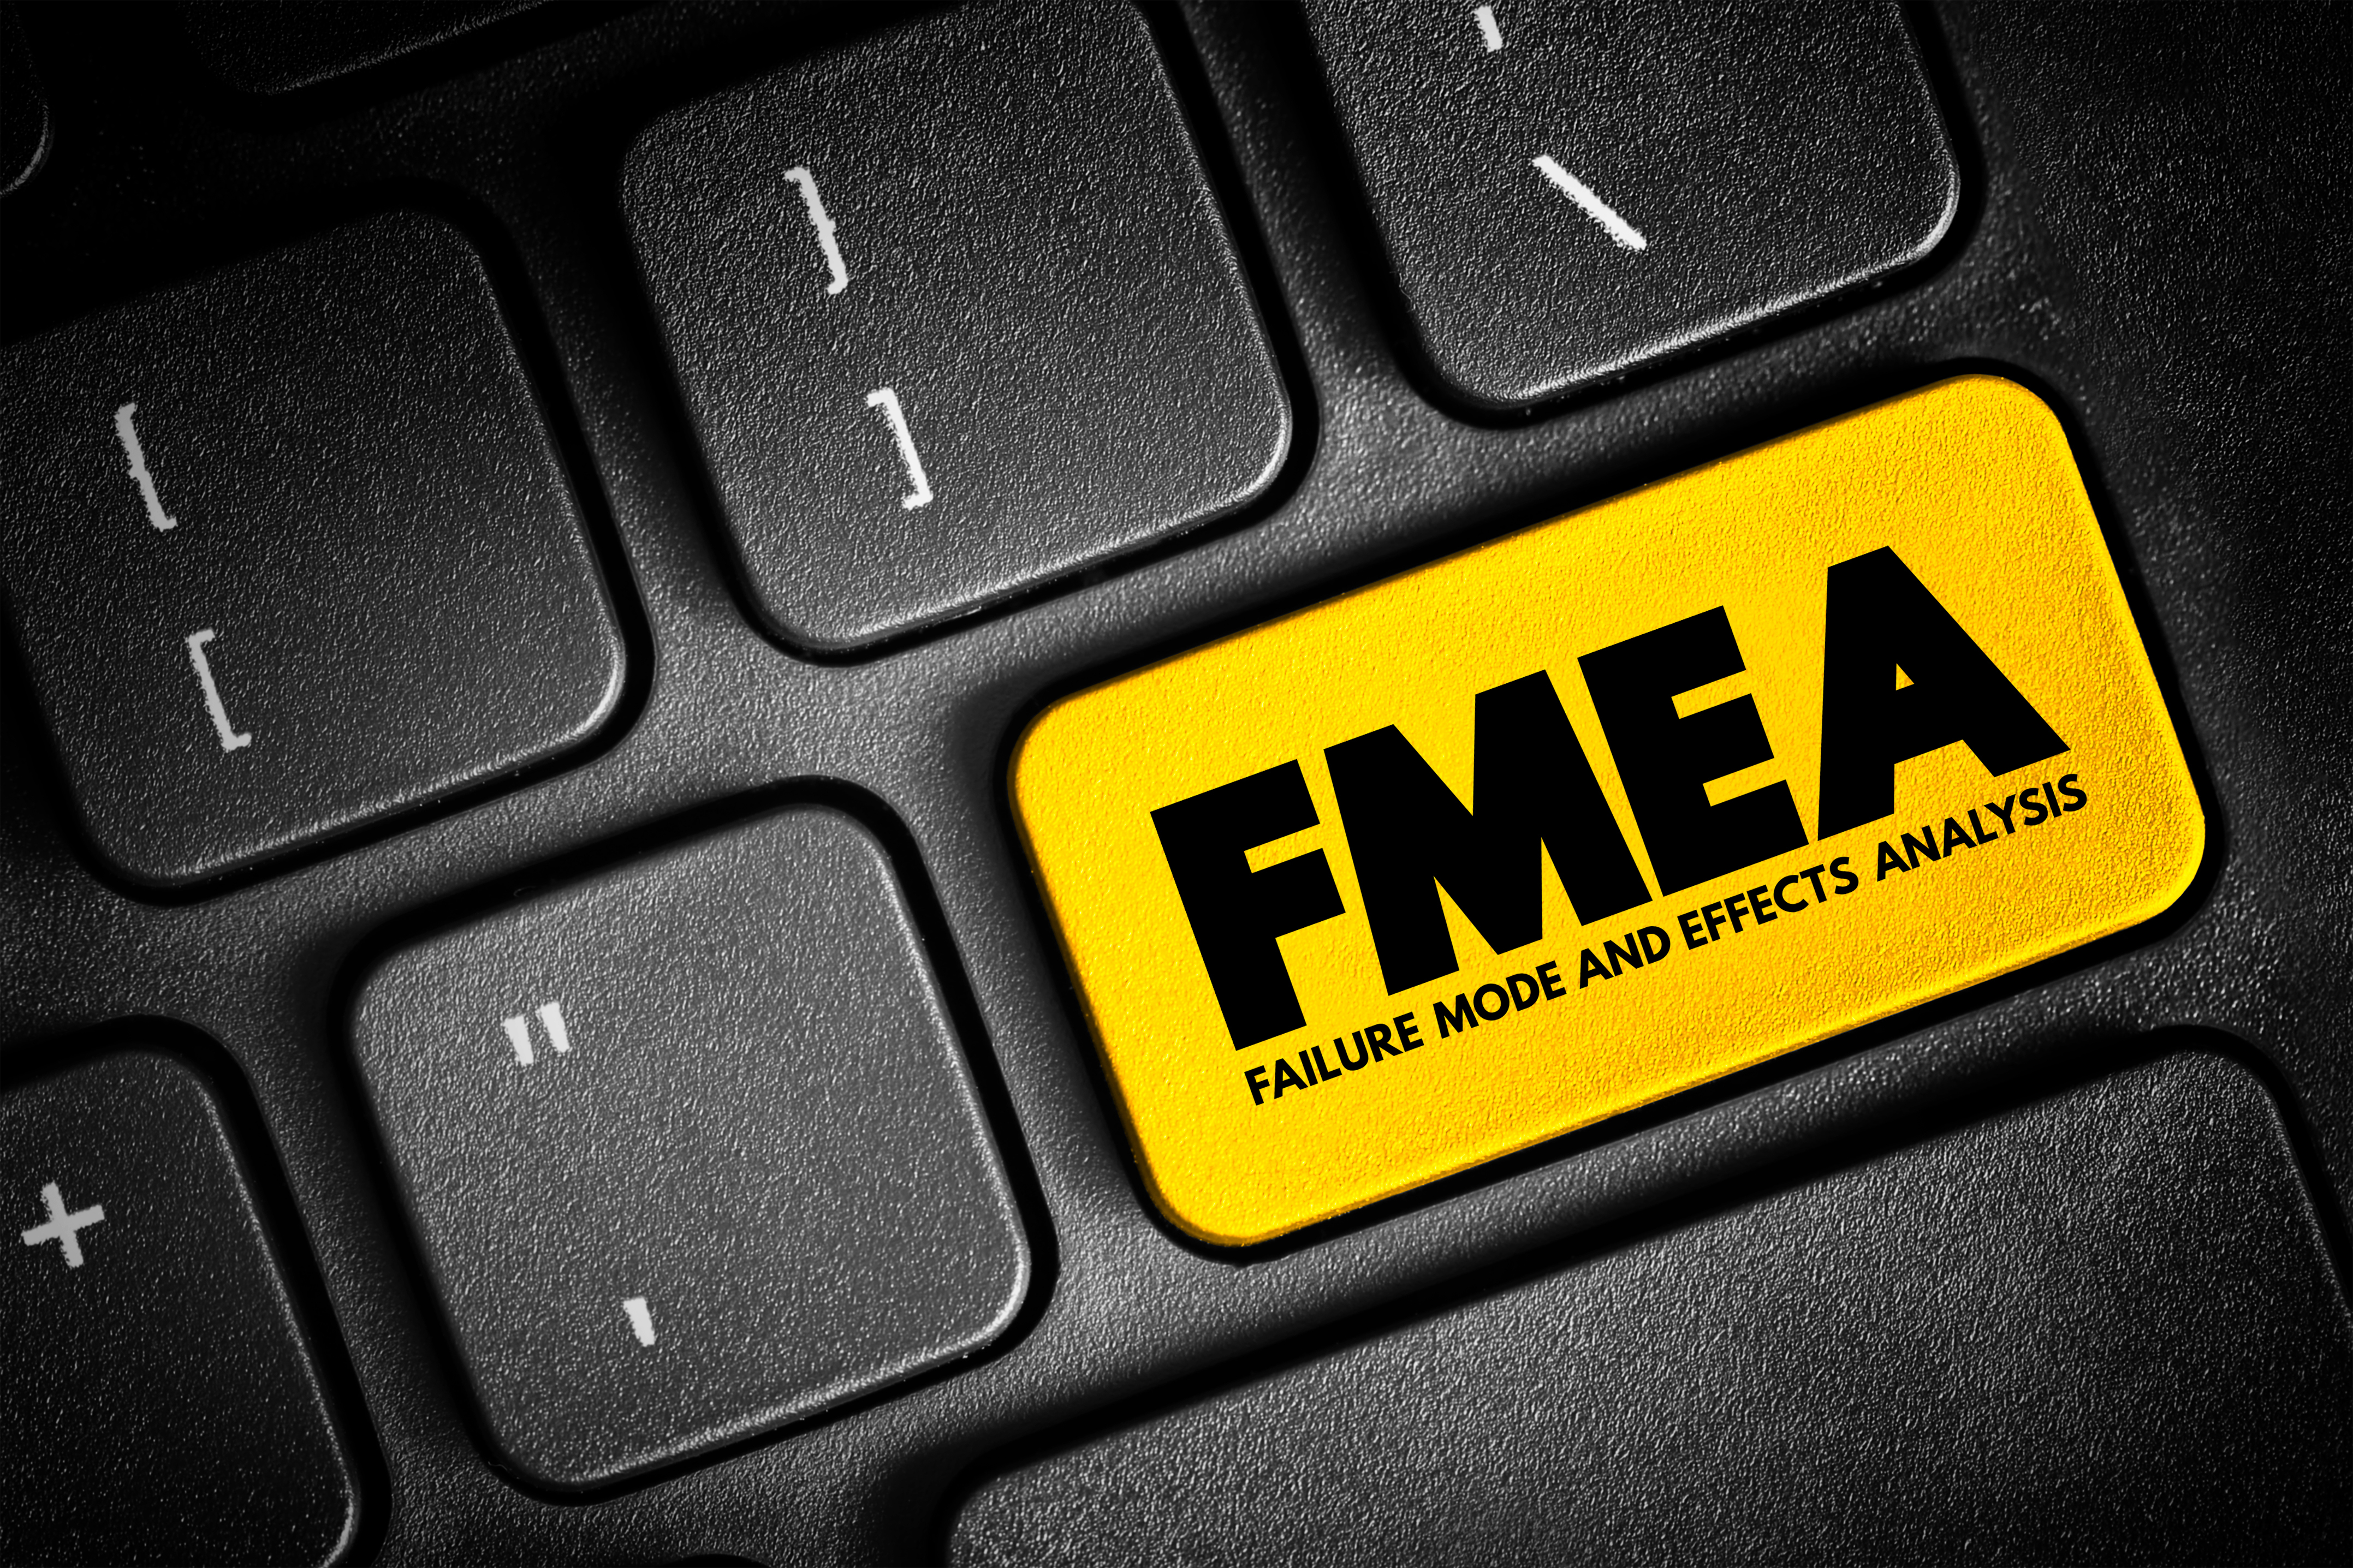 Failure Mode Effects Analysis (FMEA) Workshop